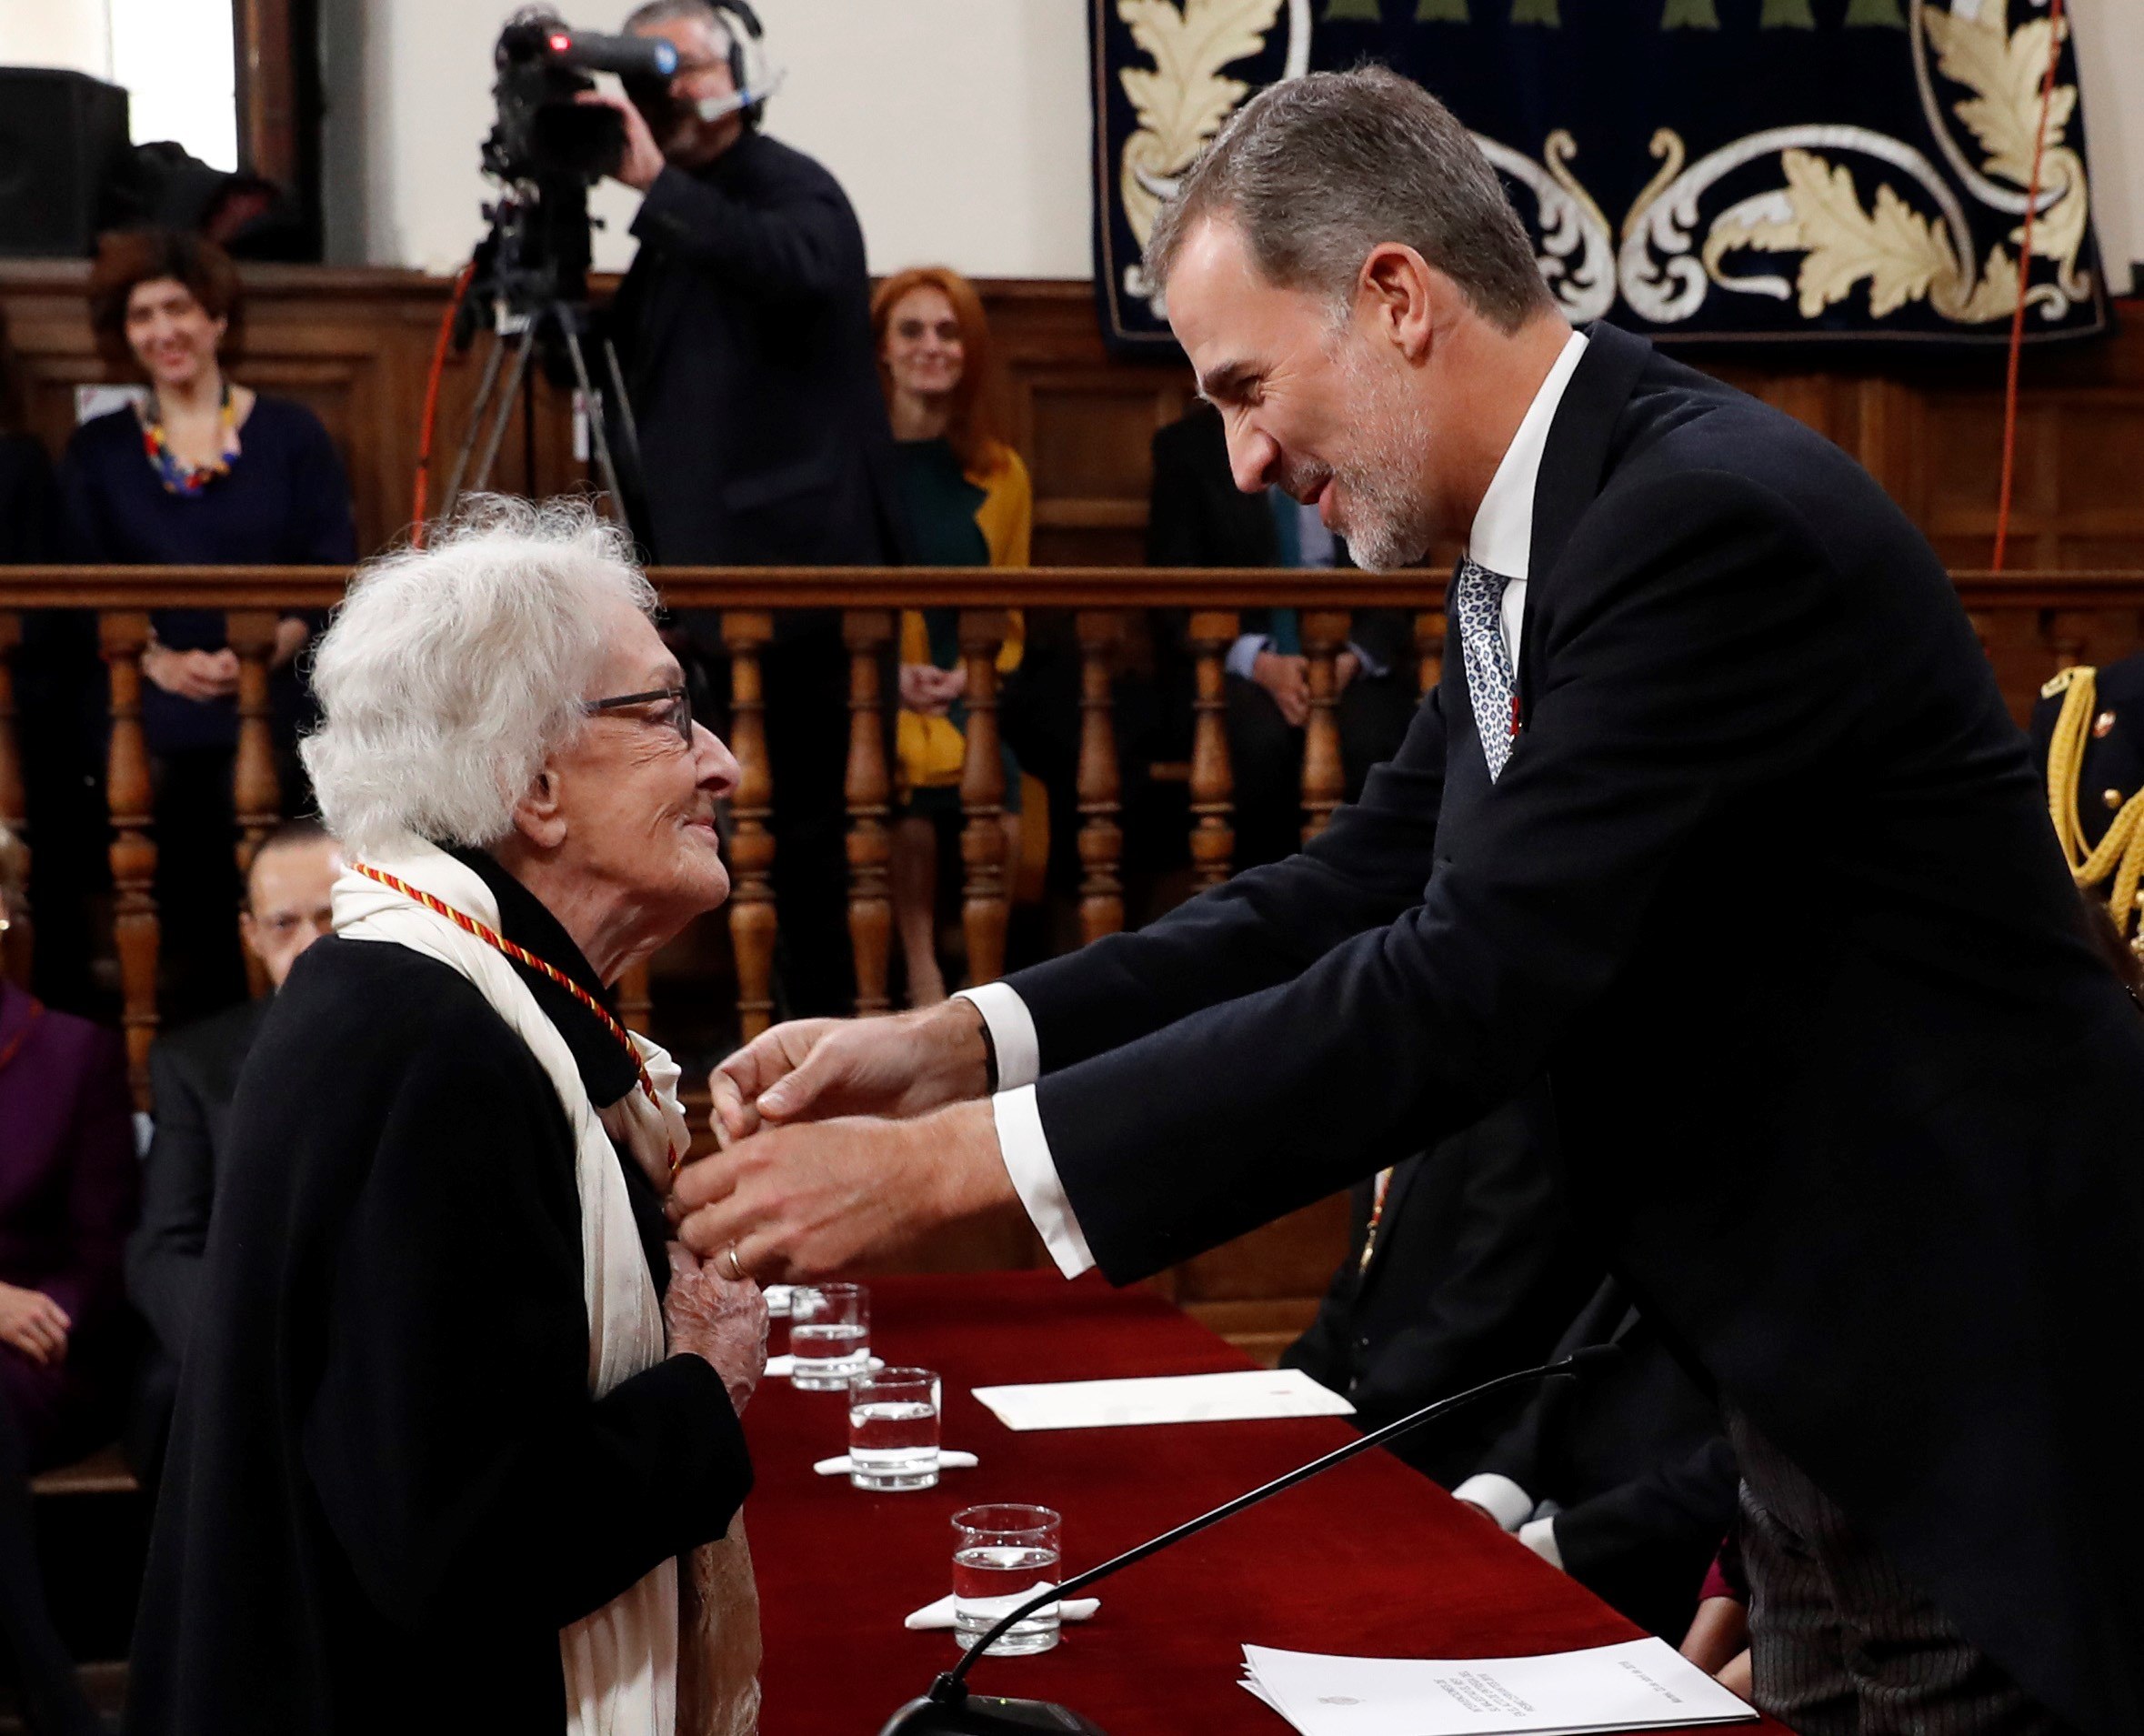 FOTO Ida Vitale, poeta uruguaya, recibe el Premio Cervantes 2019 23 abril